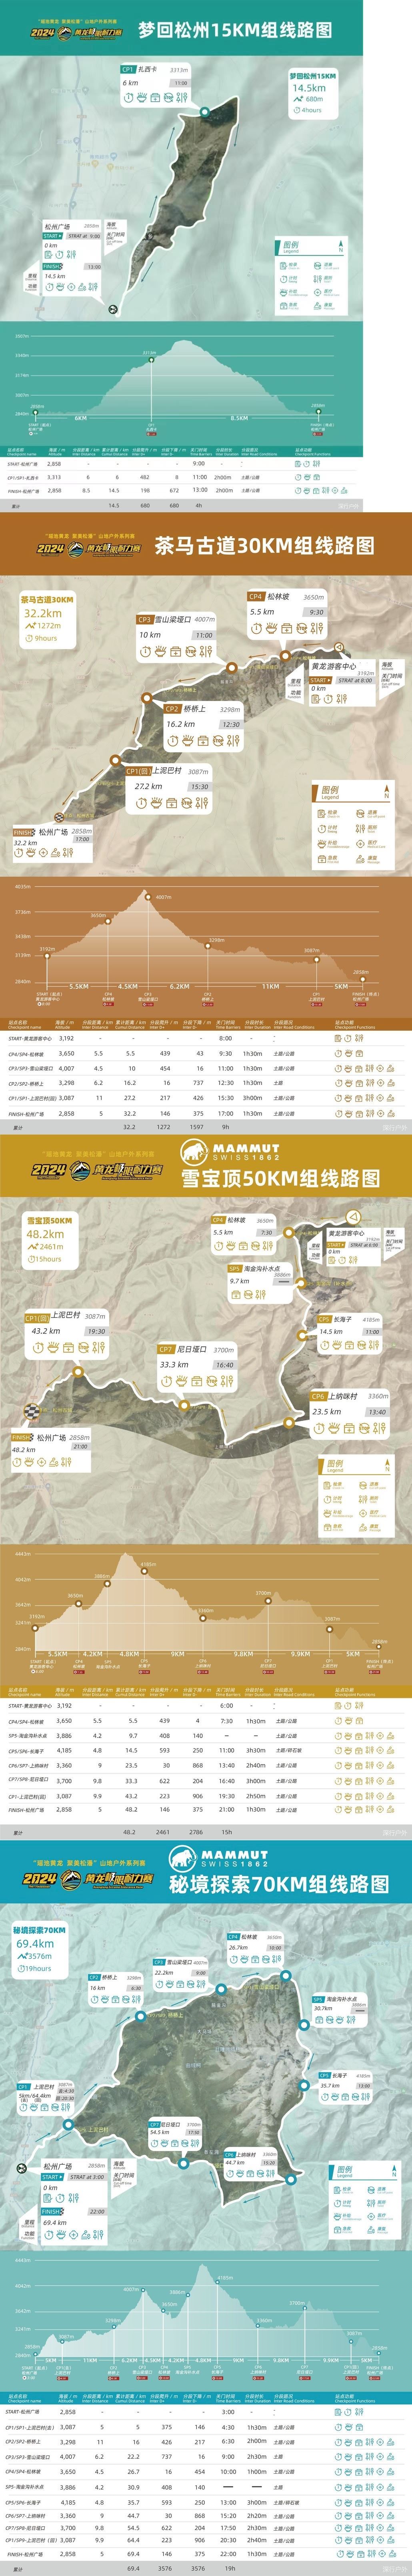 Huanglong Extreme Endurance Race Routenkarte